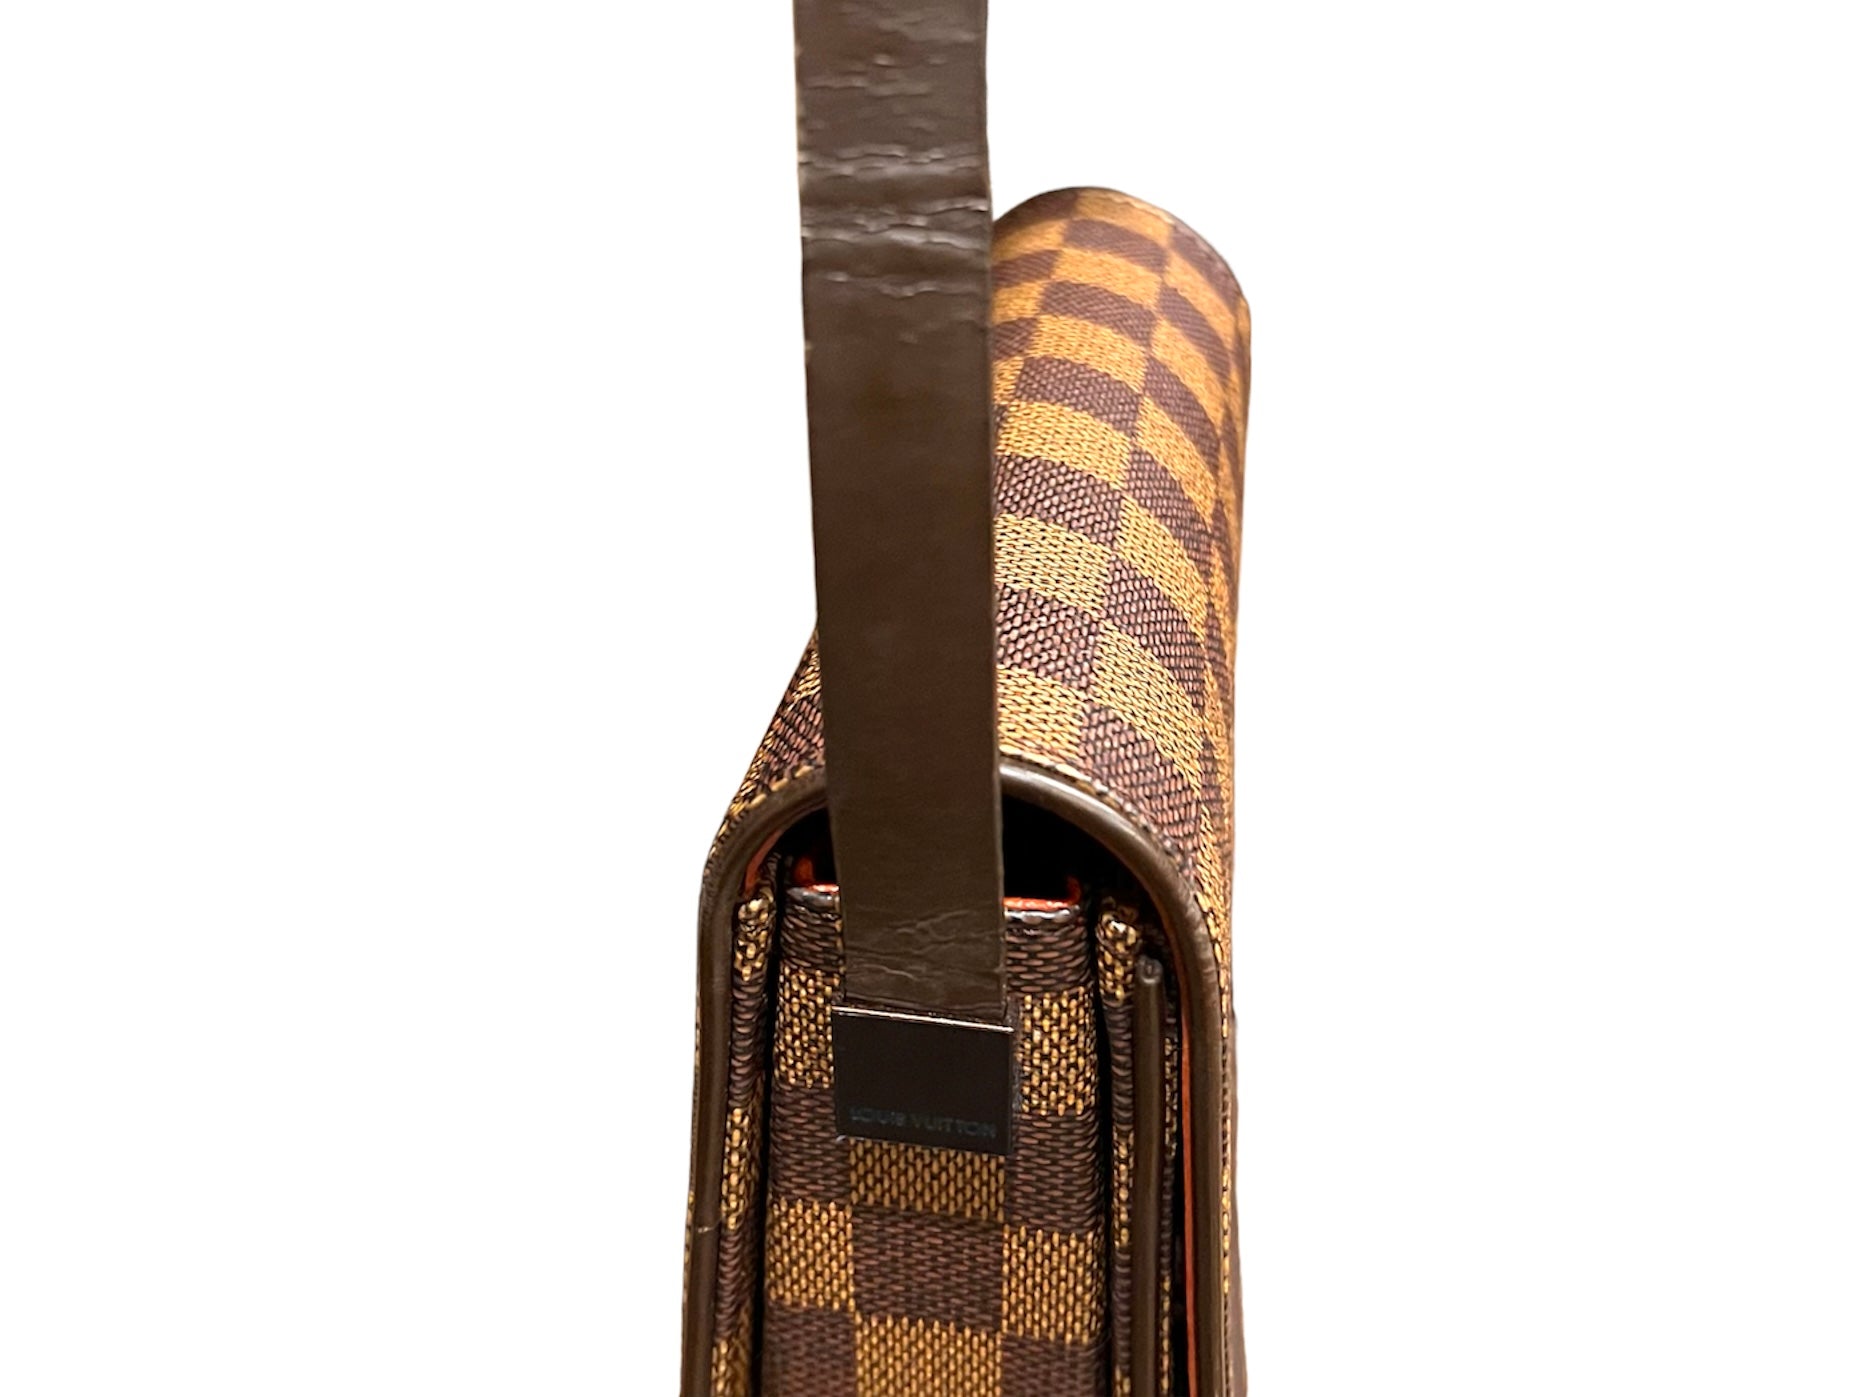 Louis Vuitton Tribeca Carre Damier Ebene Shoulder Bag on SALE